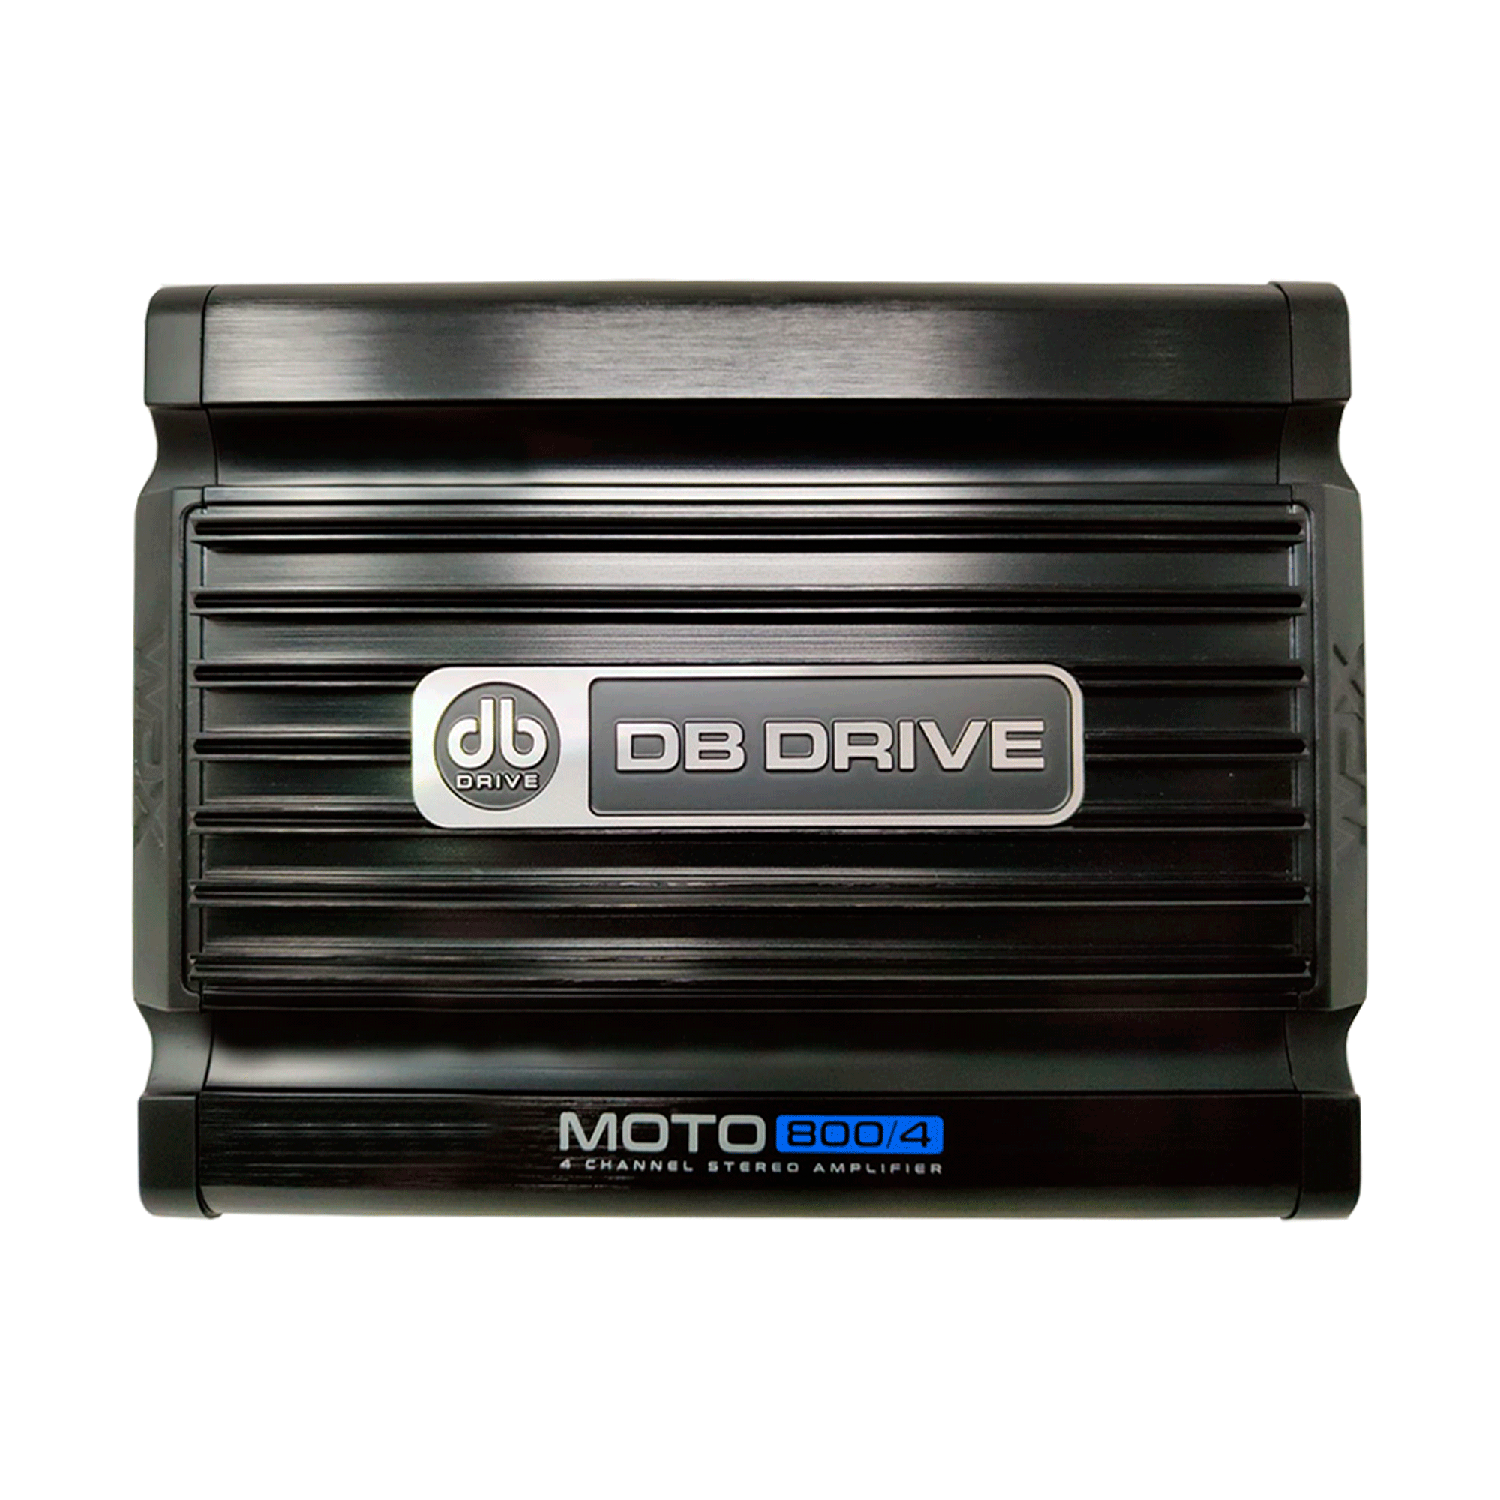 Amplificador Marino 4 Canales DB Drive MOTO800/4 Clase D